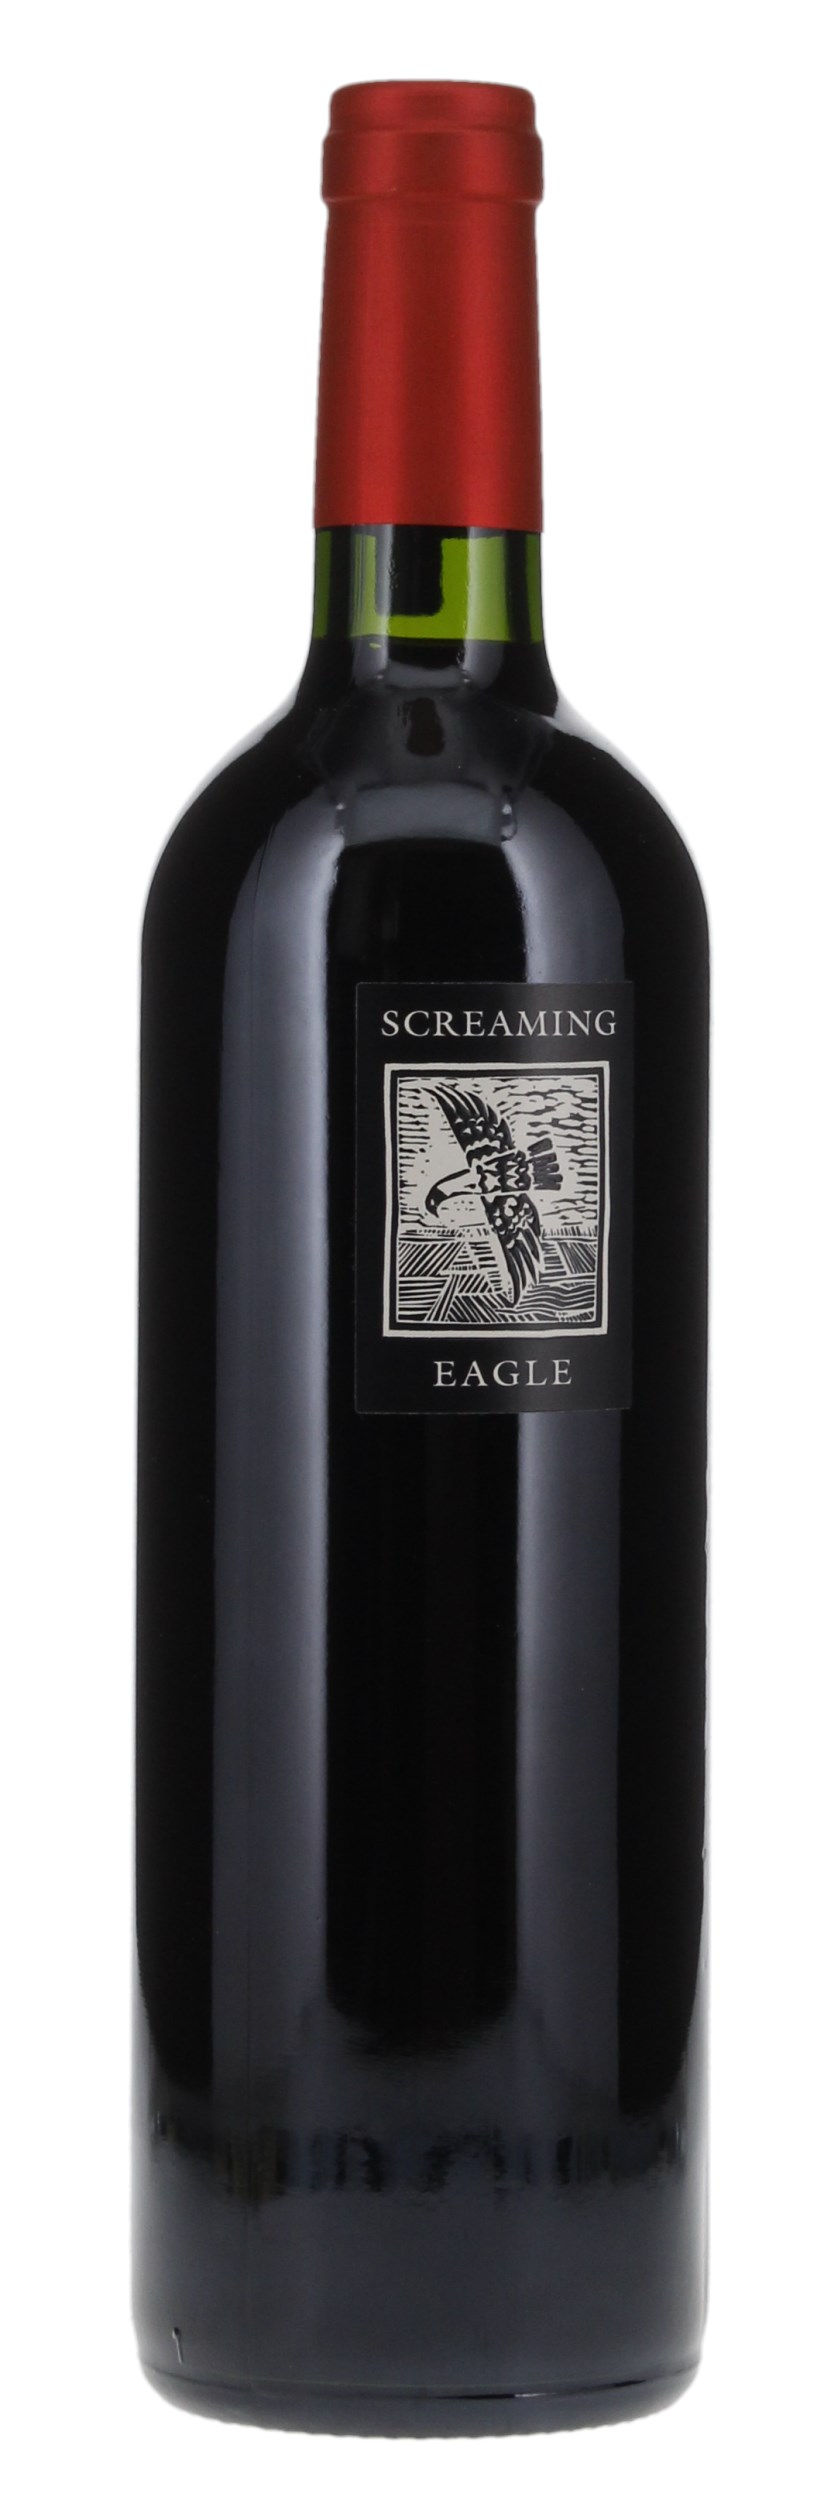 2018 Screaming Eagle Cabernet Sauvignon, 750ml